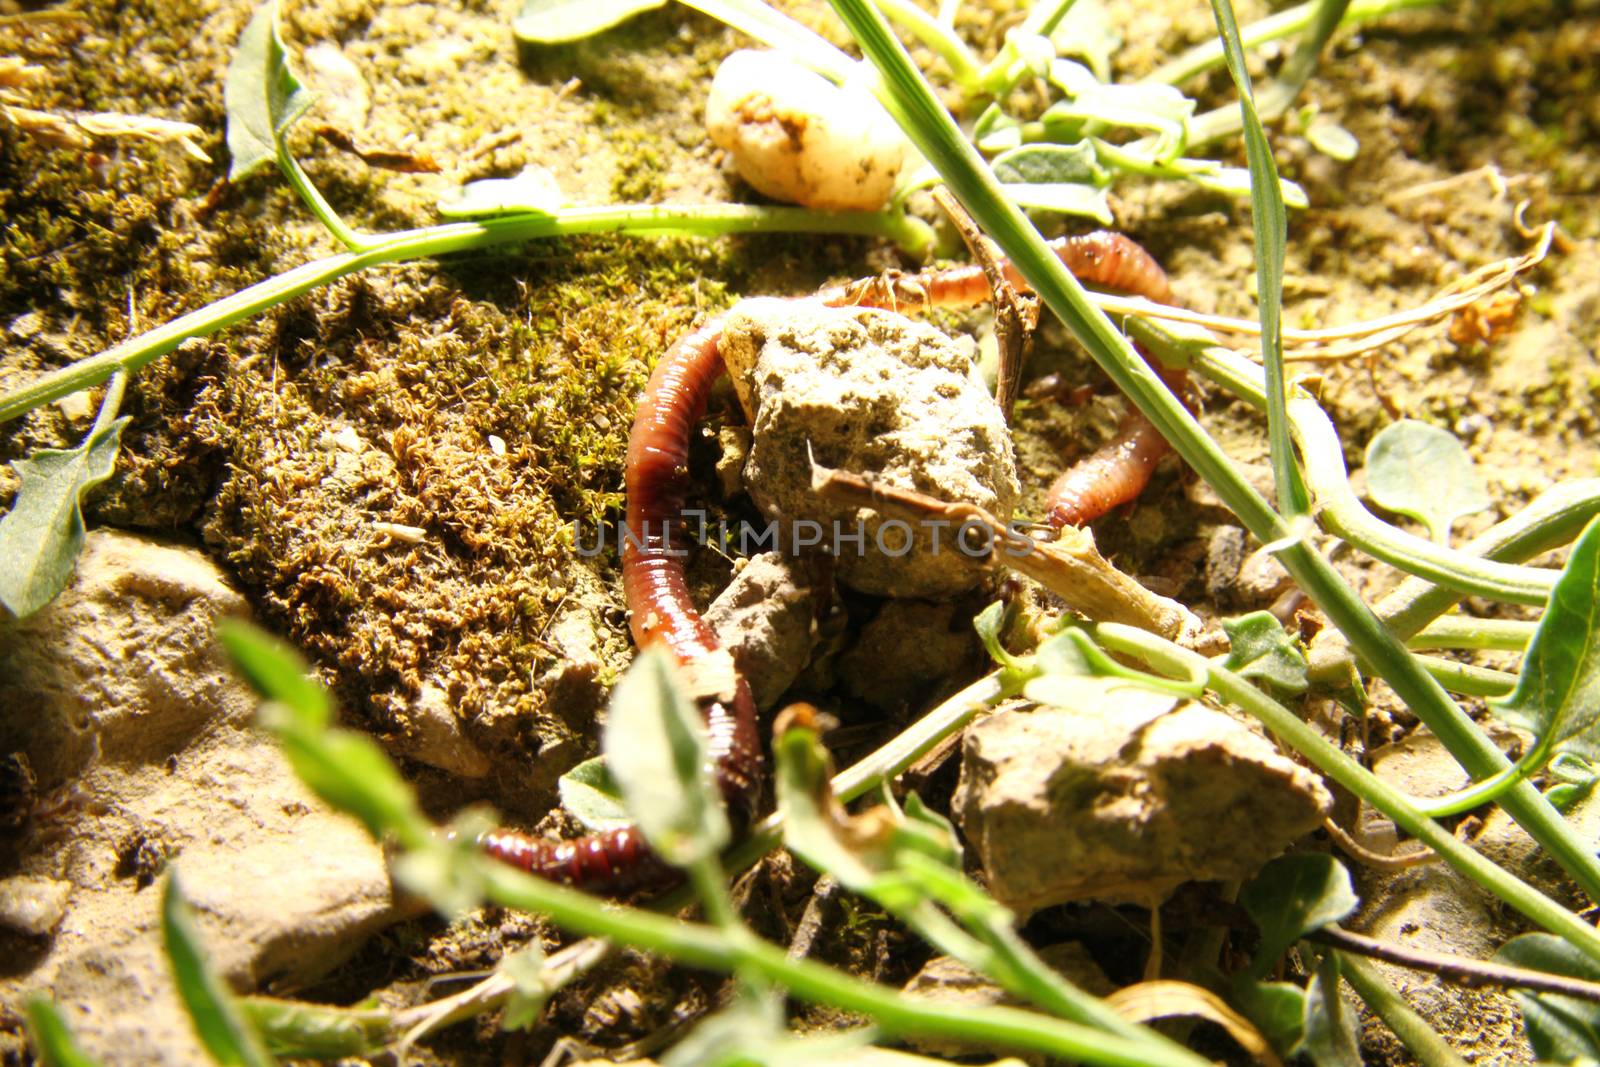 rainwater worm on the ground by alex_nako